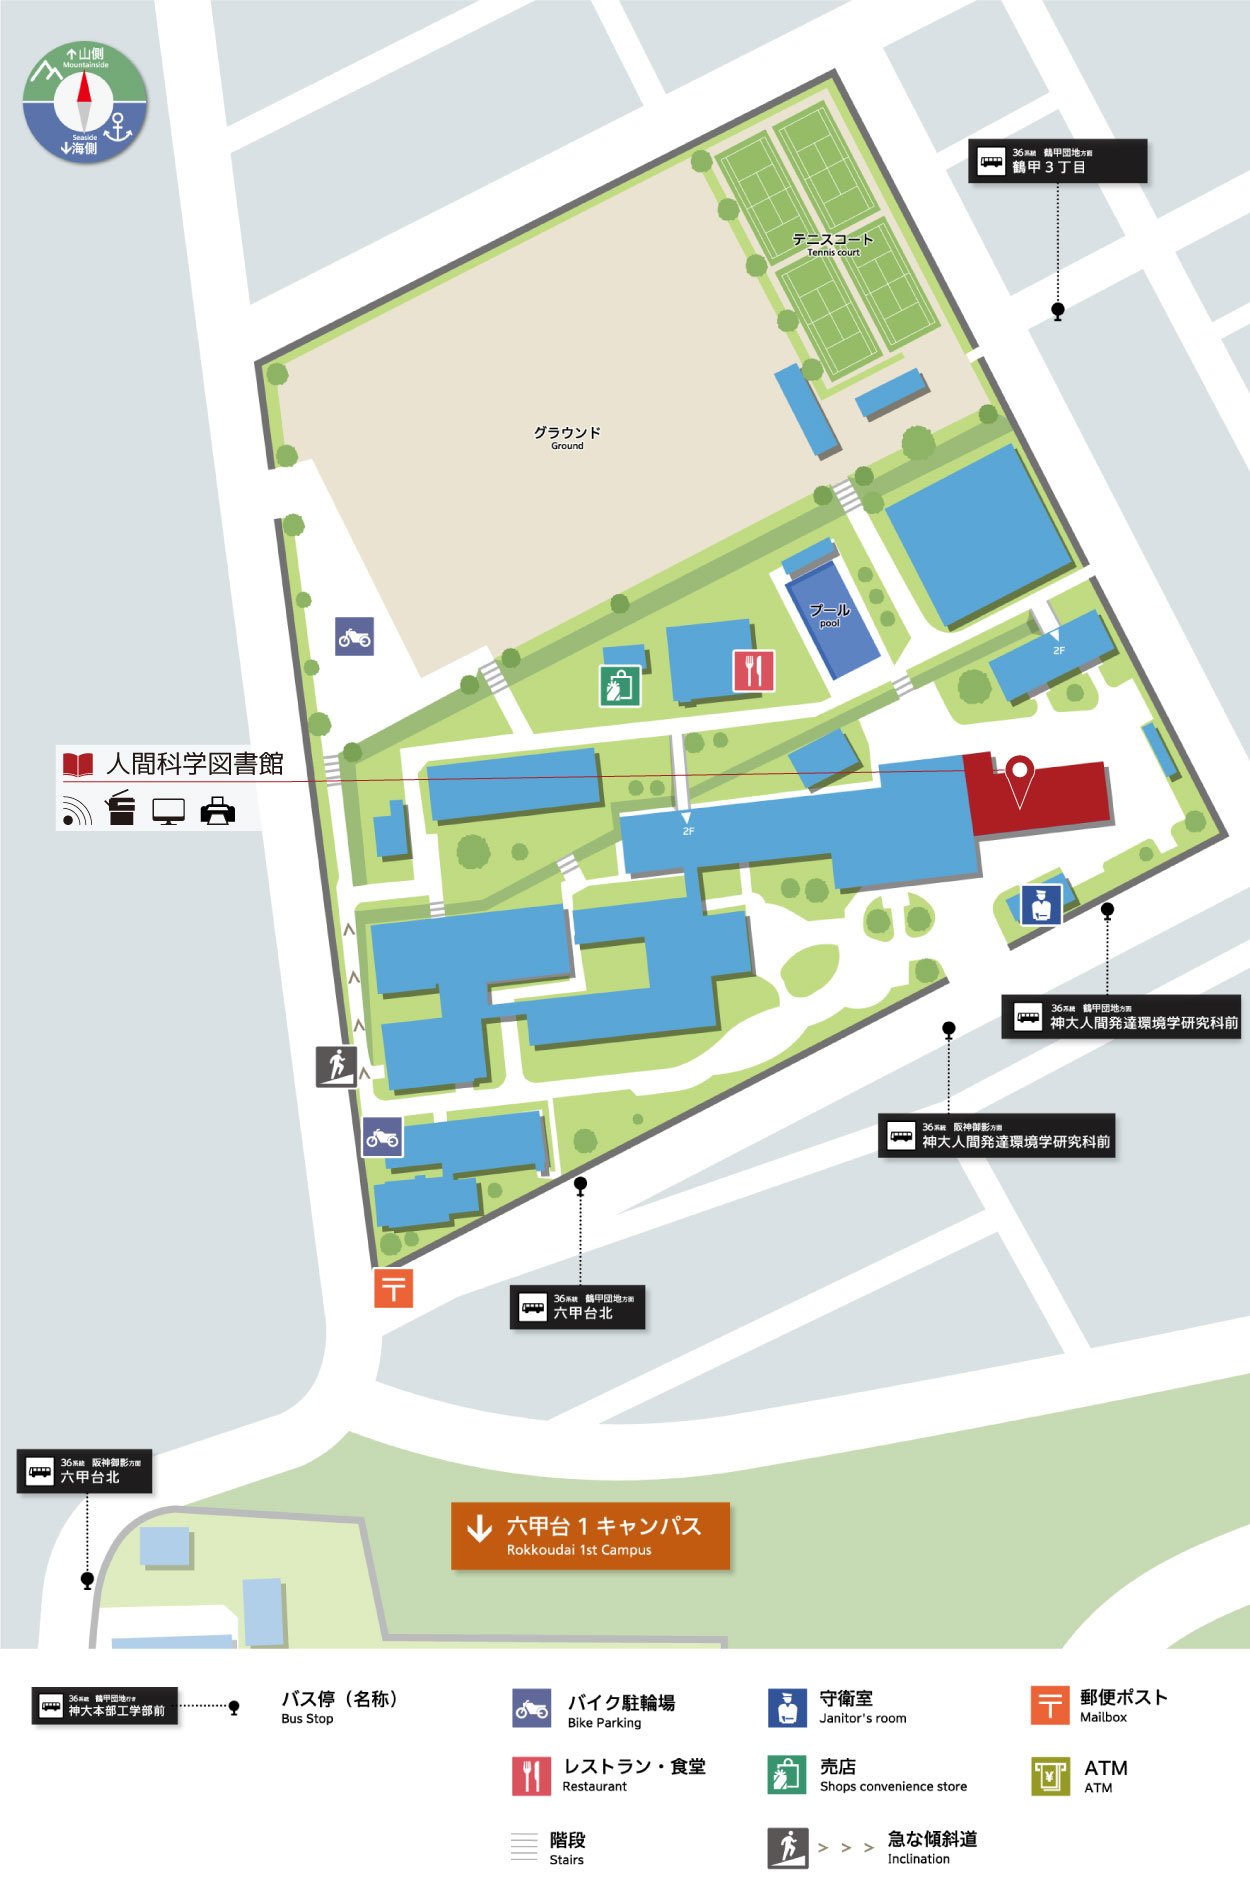 The campus map of 2nd Tsurukabuto